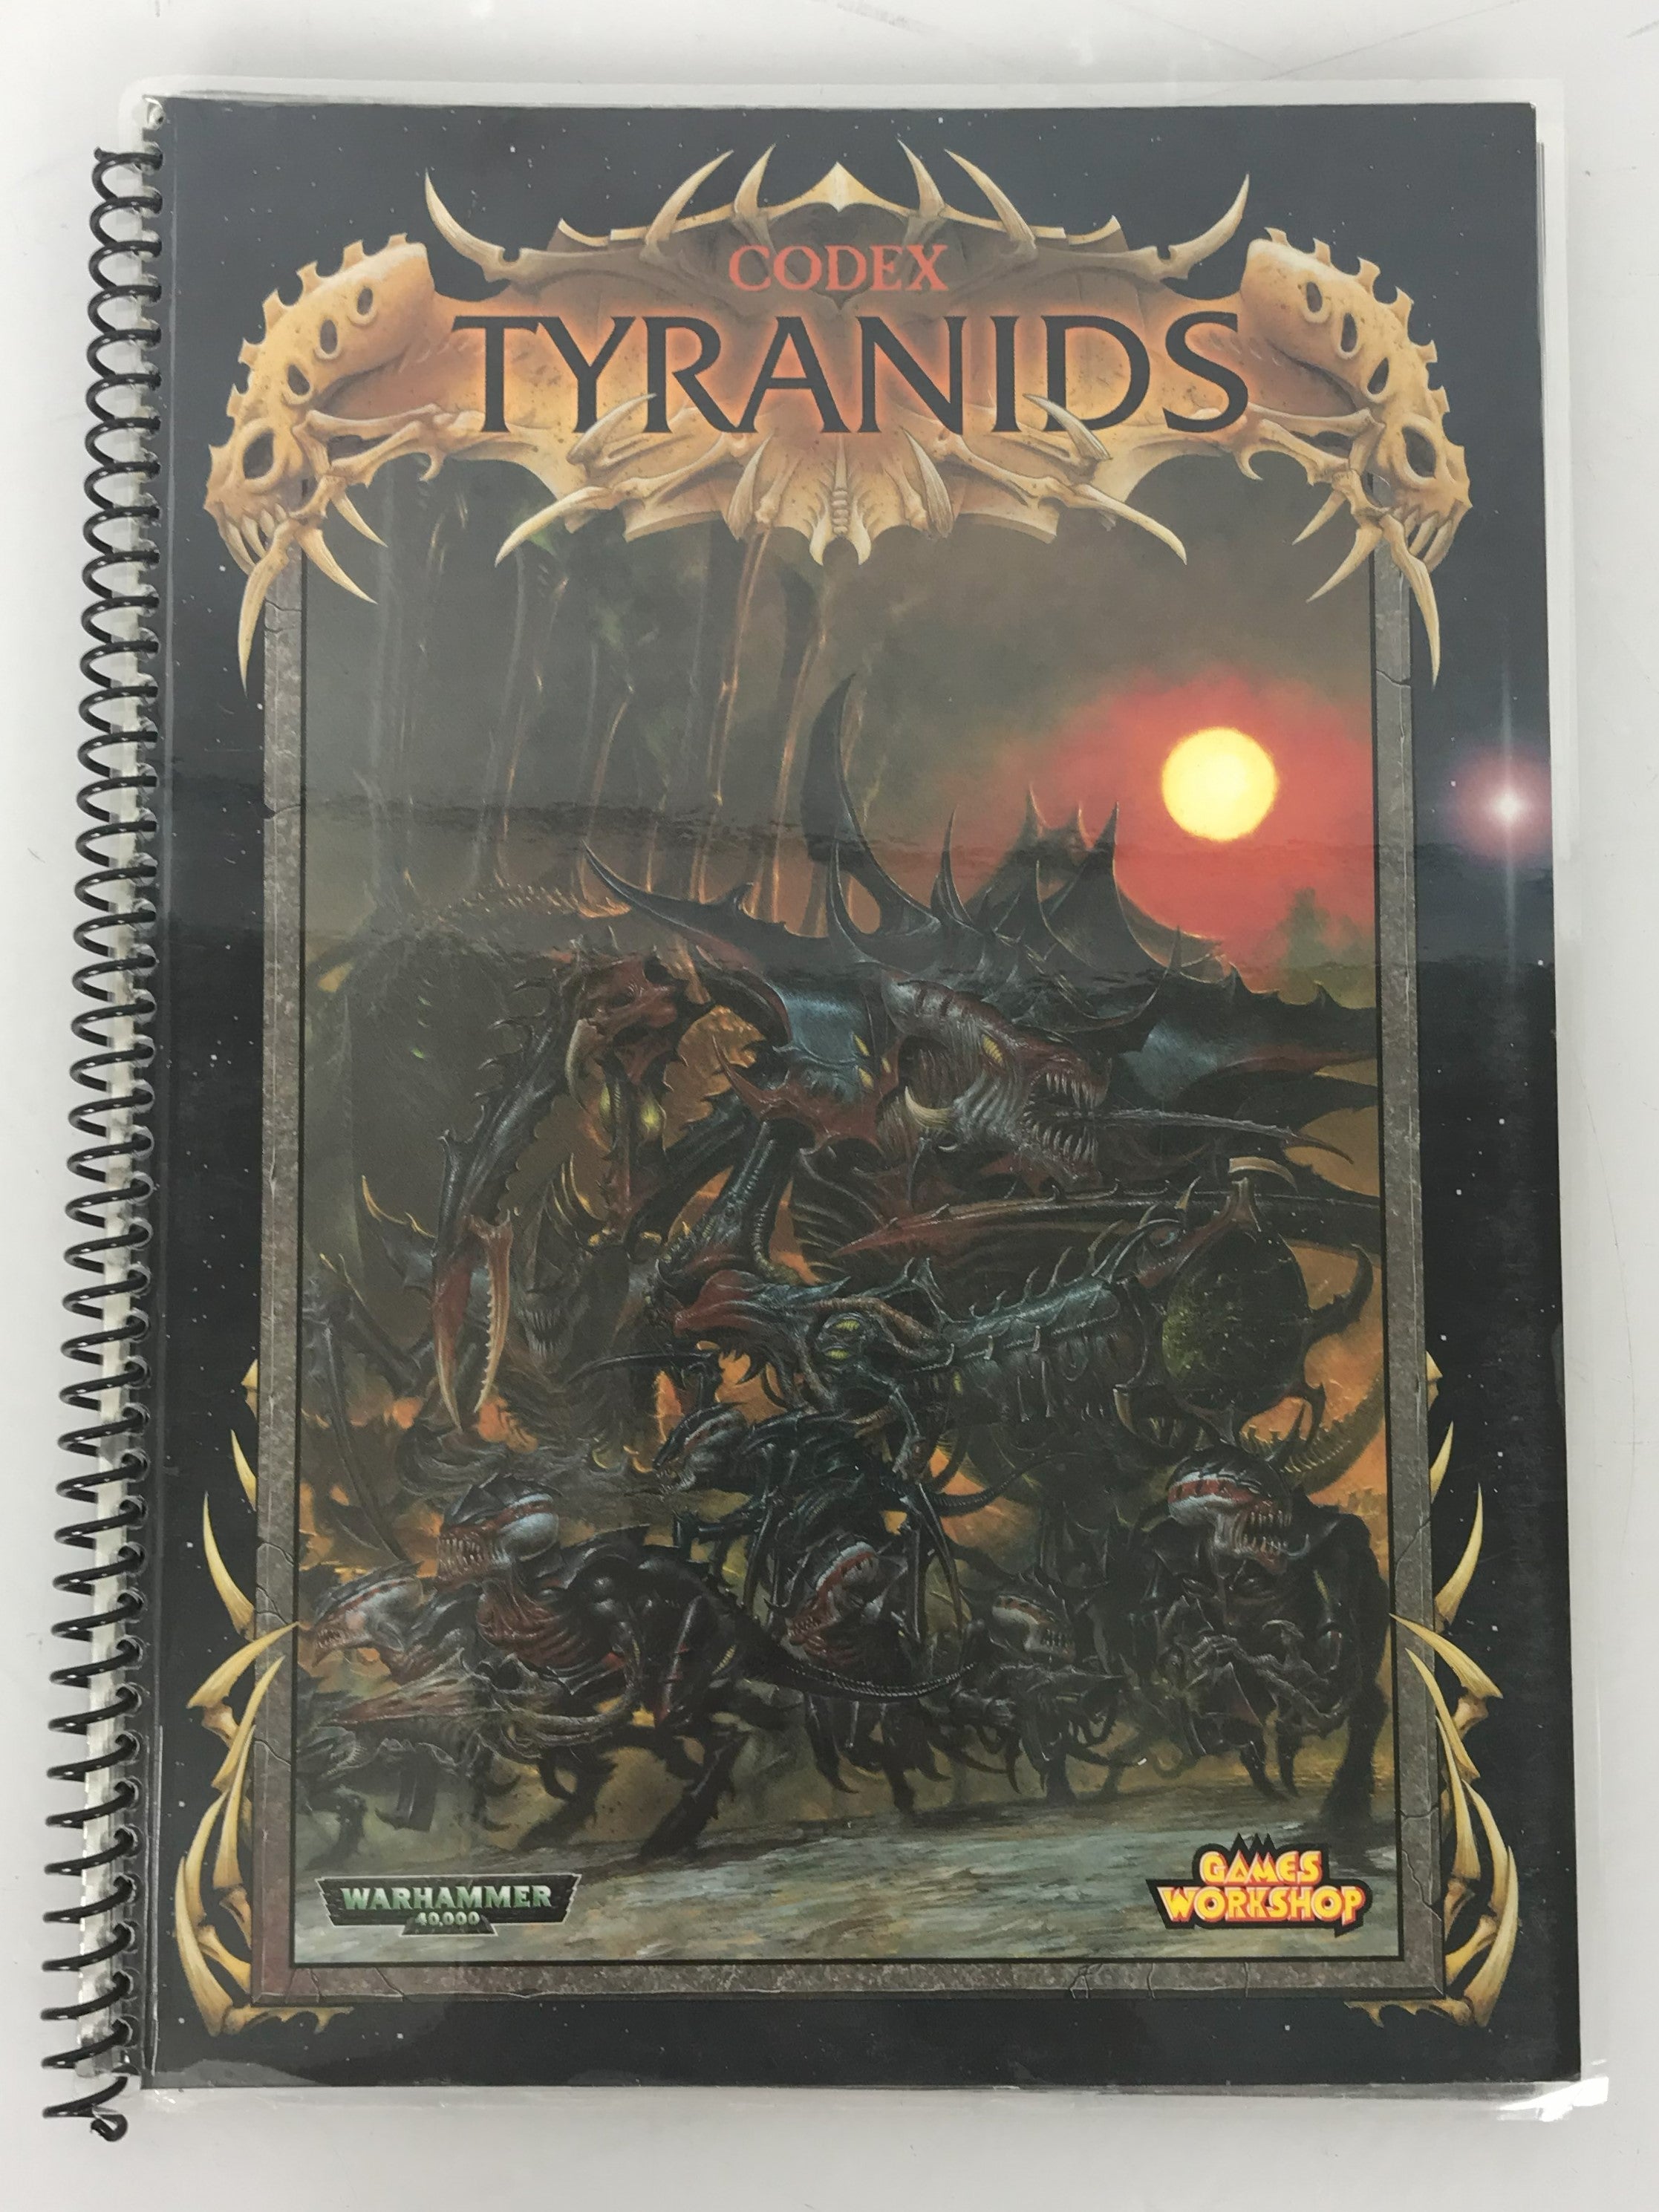 Lot of 2 Warhammer 40,000 Tyranids - 2001 & 2004